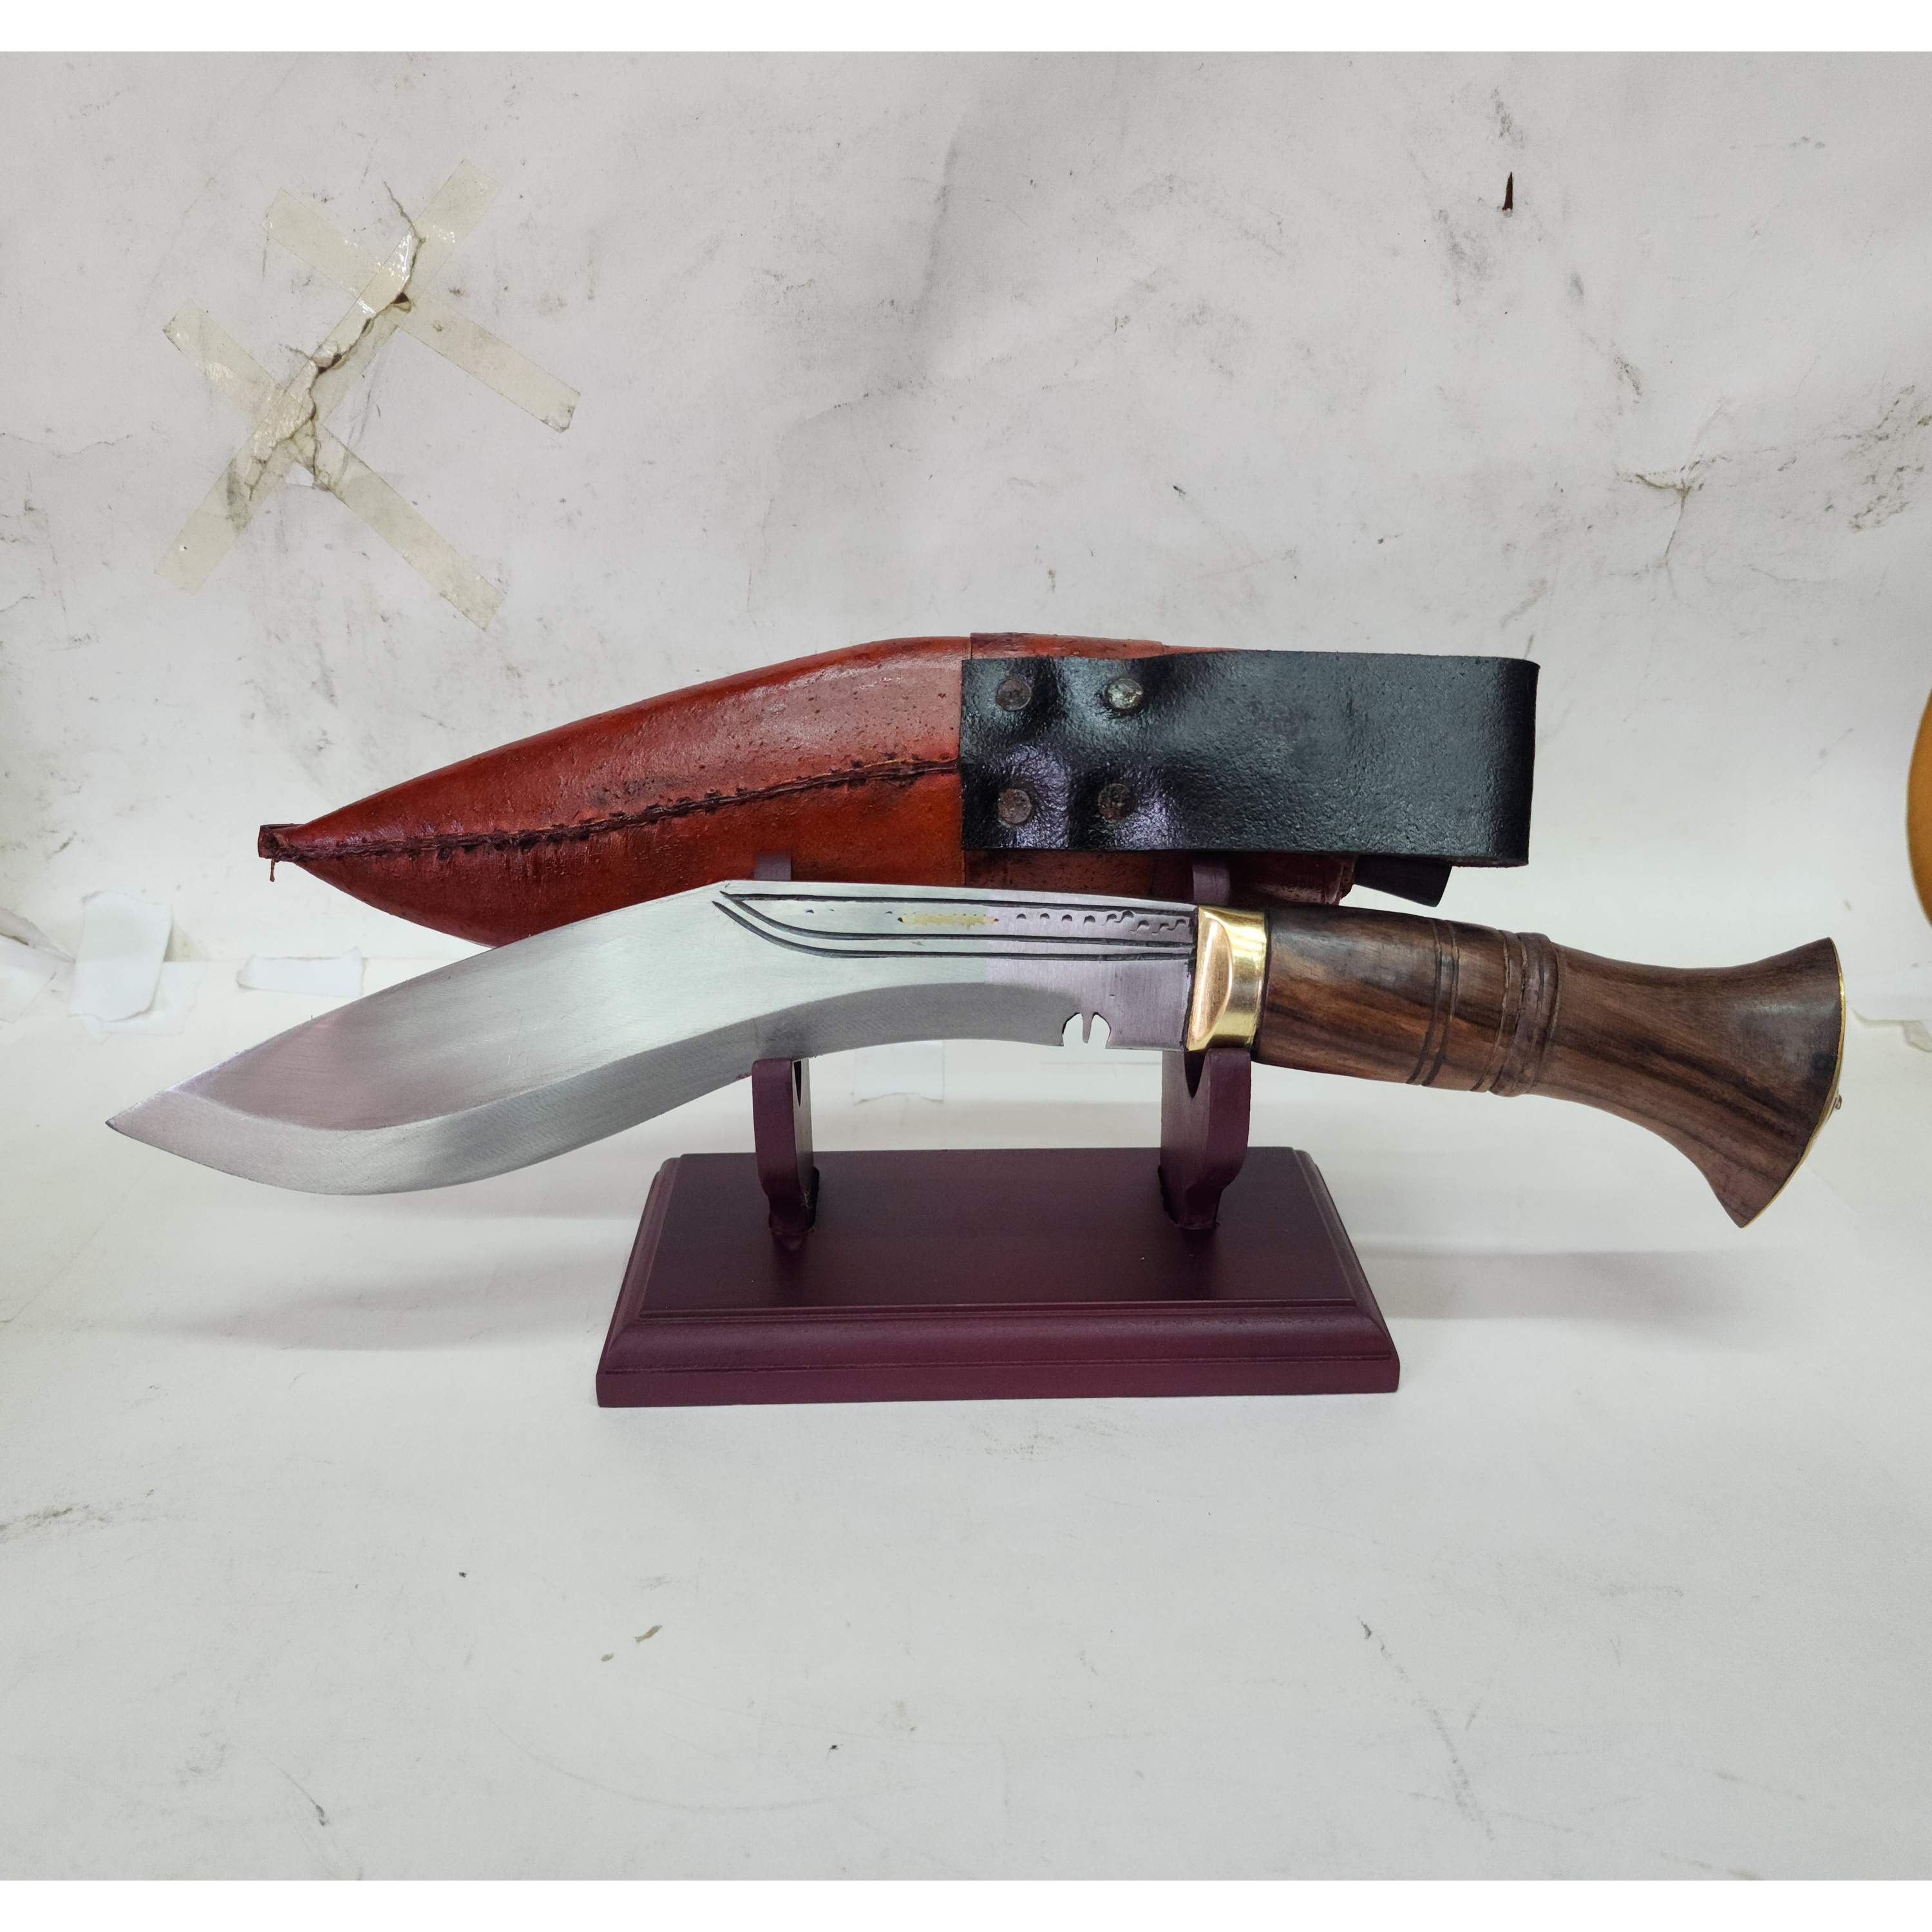 8 Inch, khukuri, Gurkha Knife - mini Jungle Safari With Leather Cover And Stand, Nepali Machete